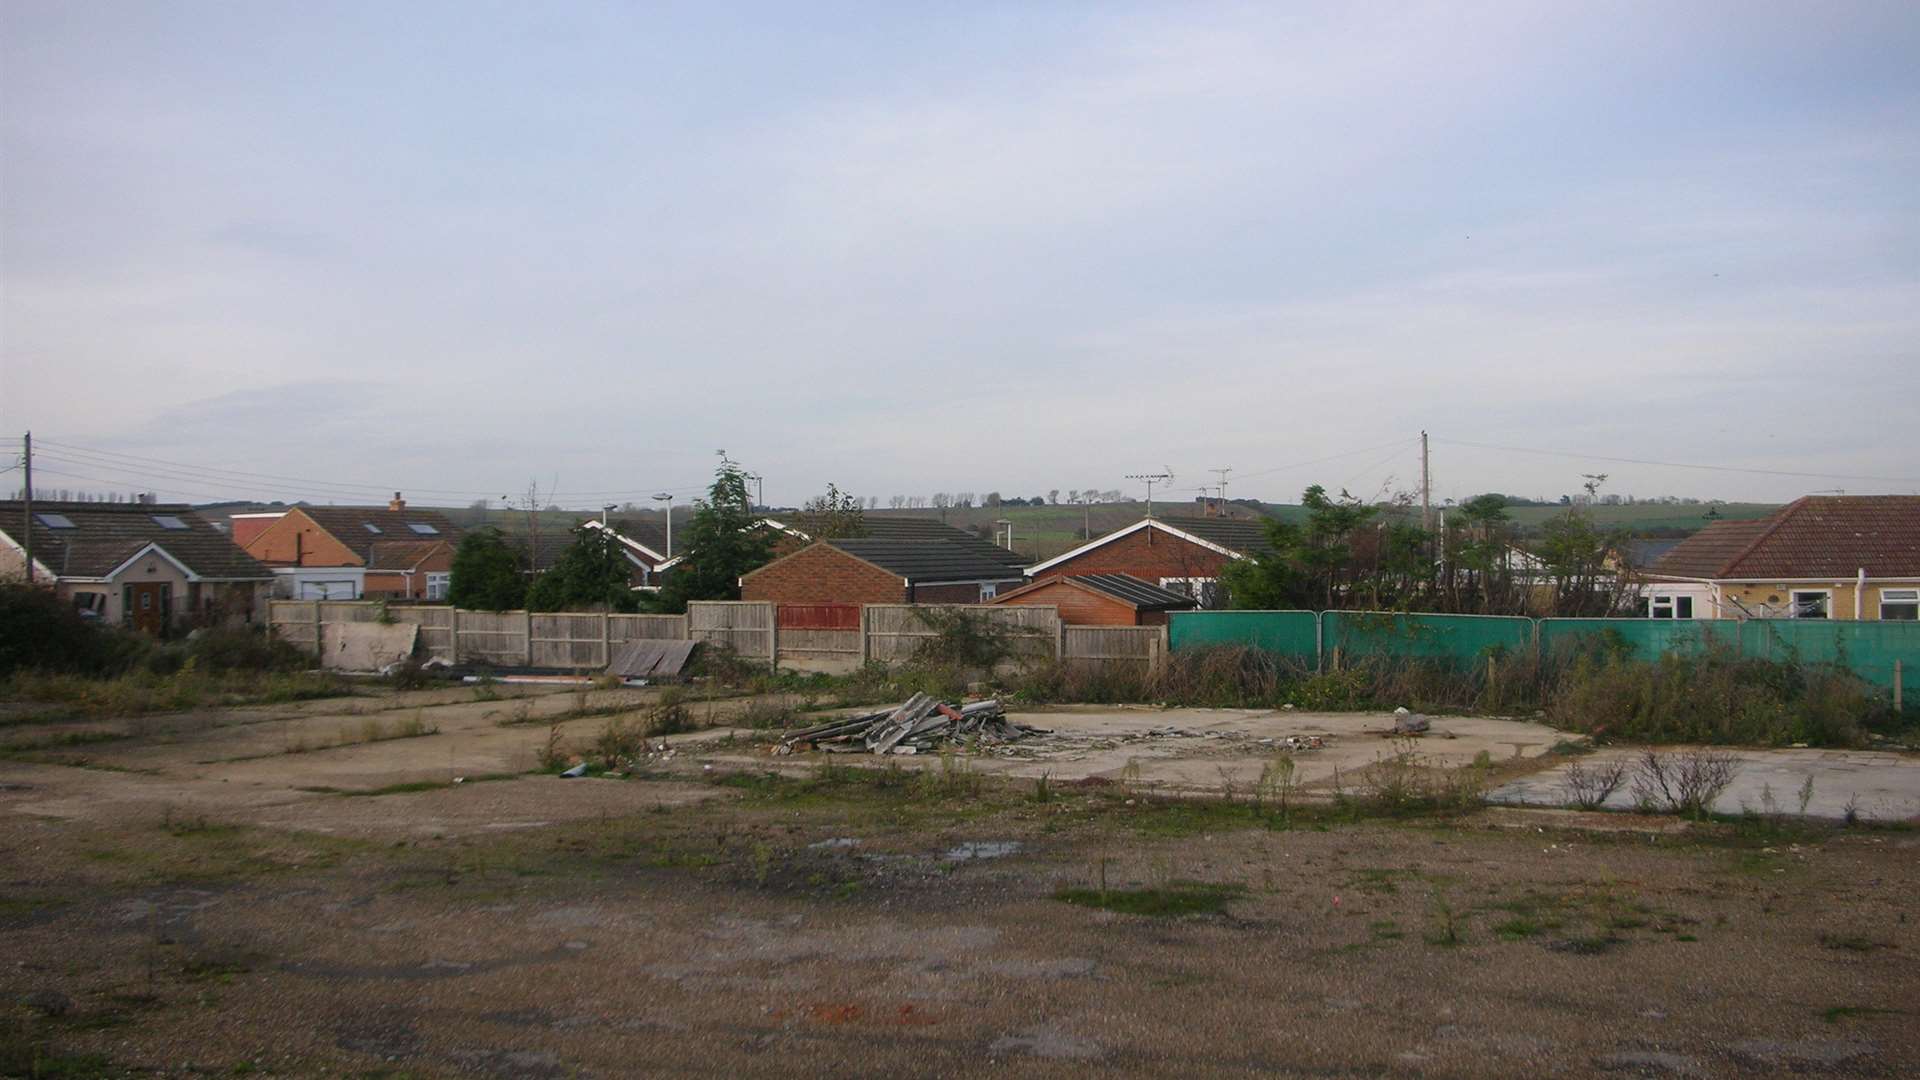 The vacant plot in Leysdown Road